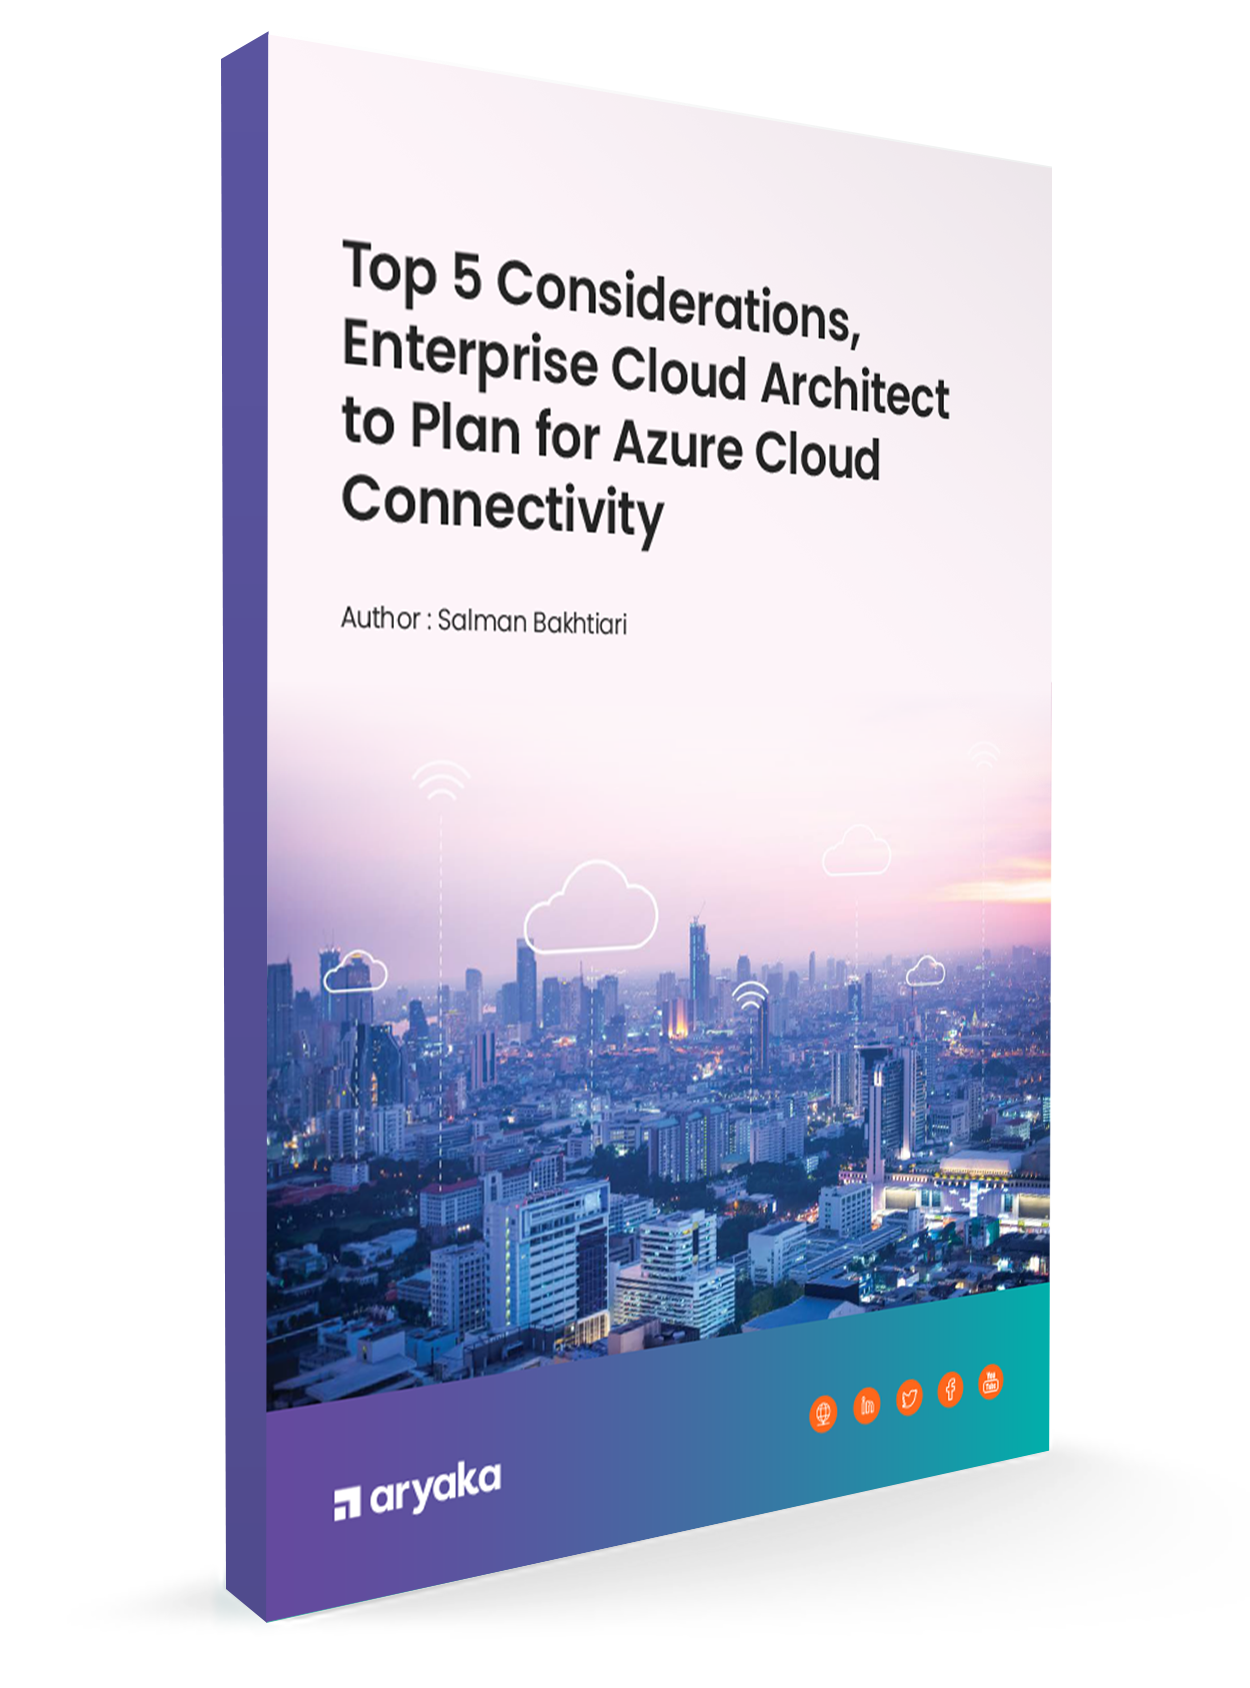 Top 5 Considerations, Enterprise Cloud Architect to Plan for Azure Cloud Connectivity